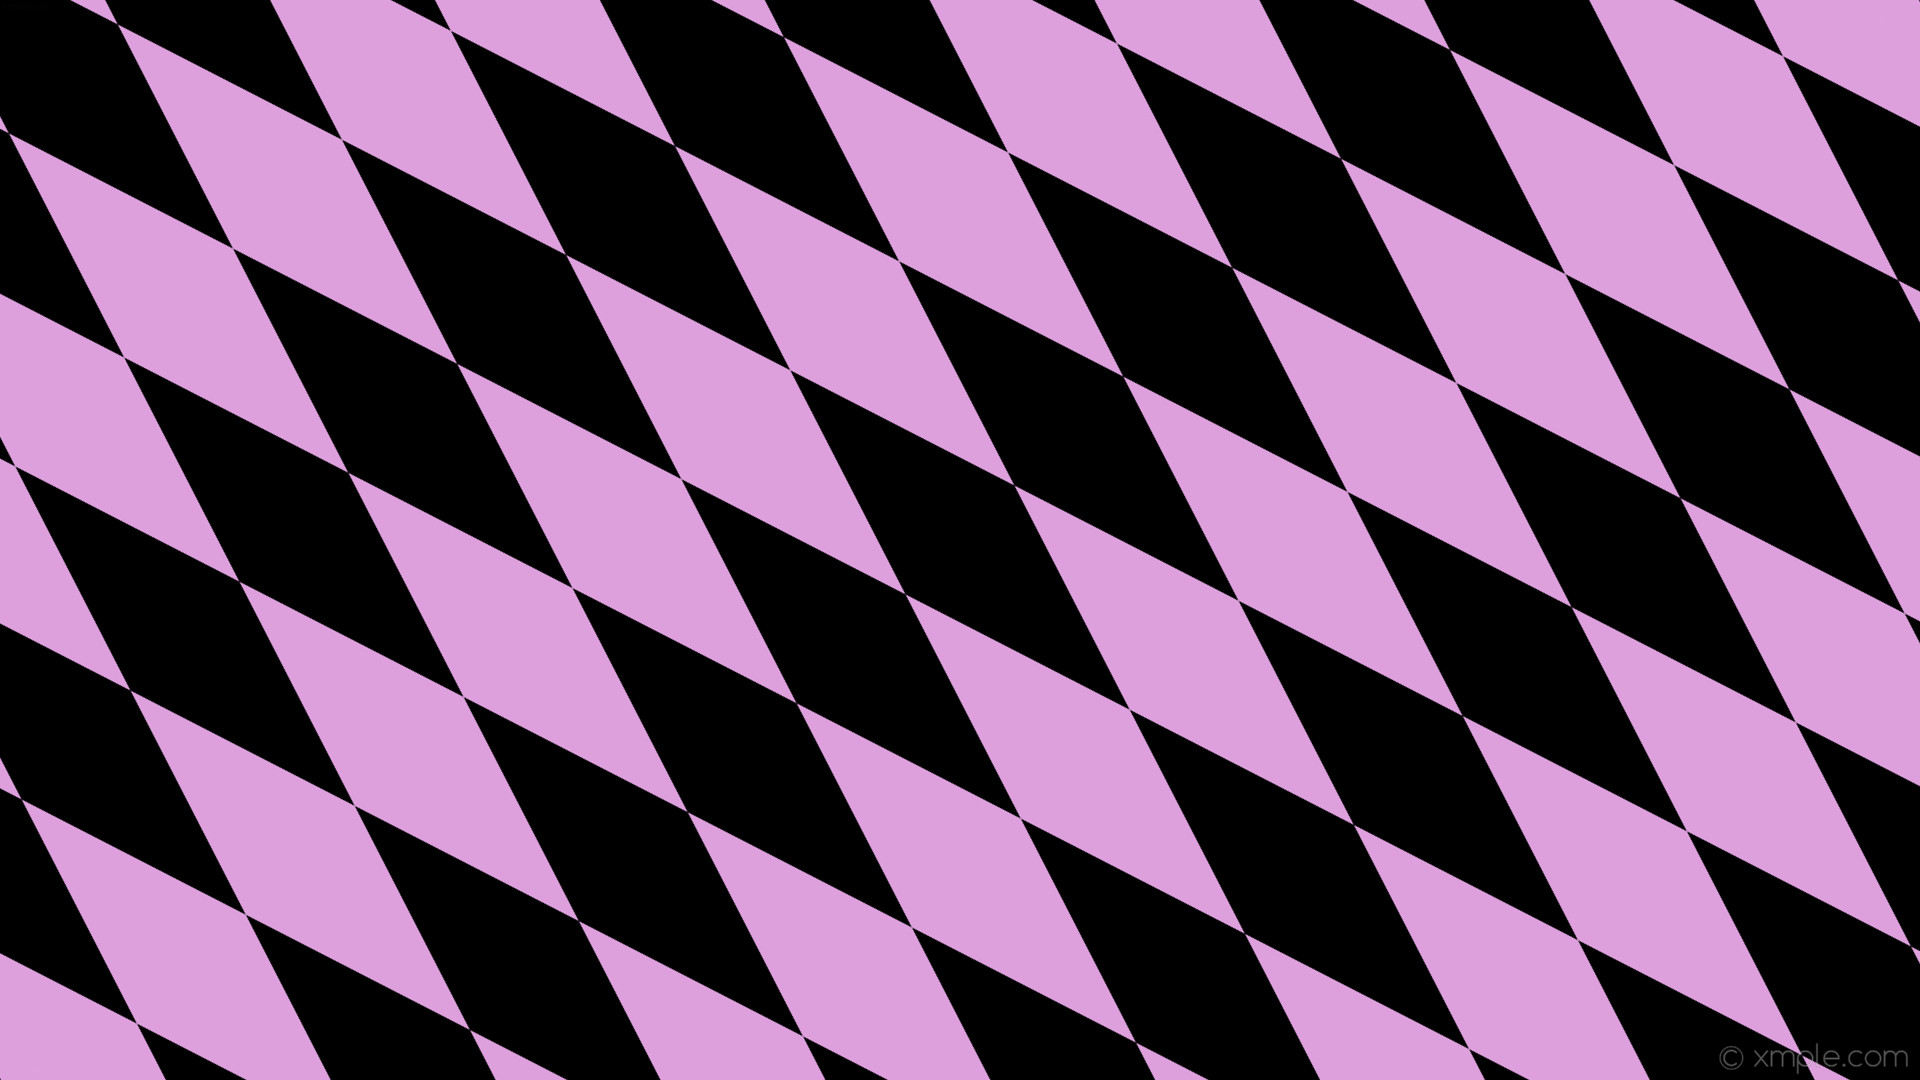 Wallpaper lozenge black rhombus purple diamond plum #dda0dd 135 480px 154px